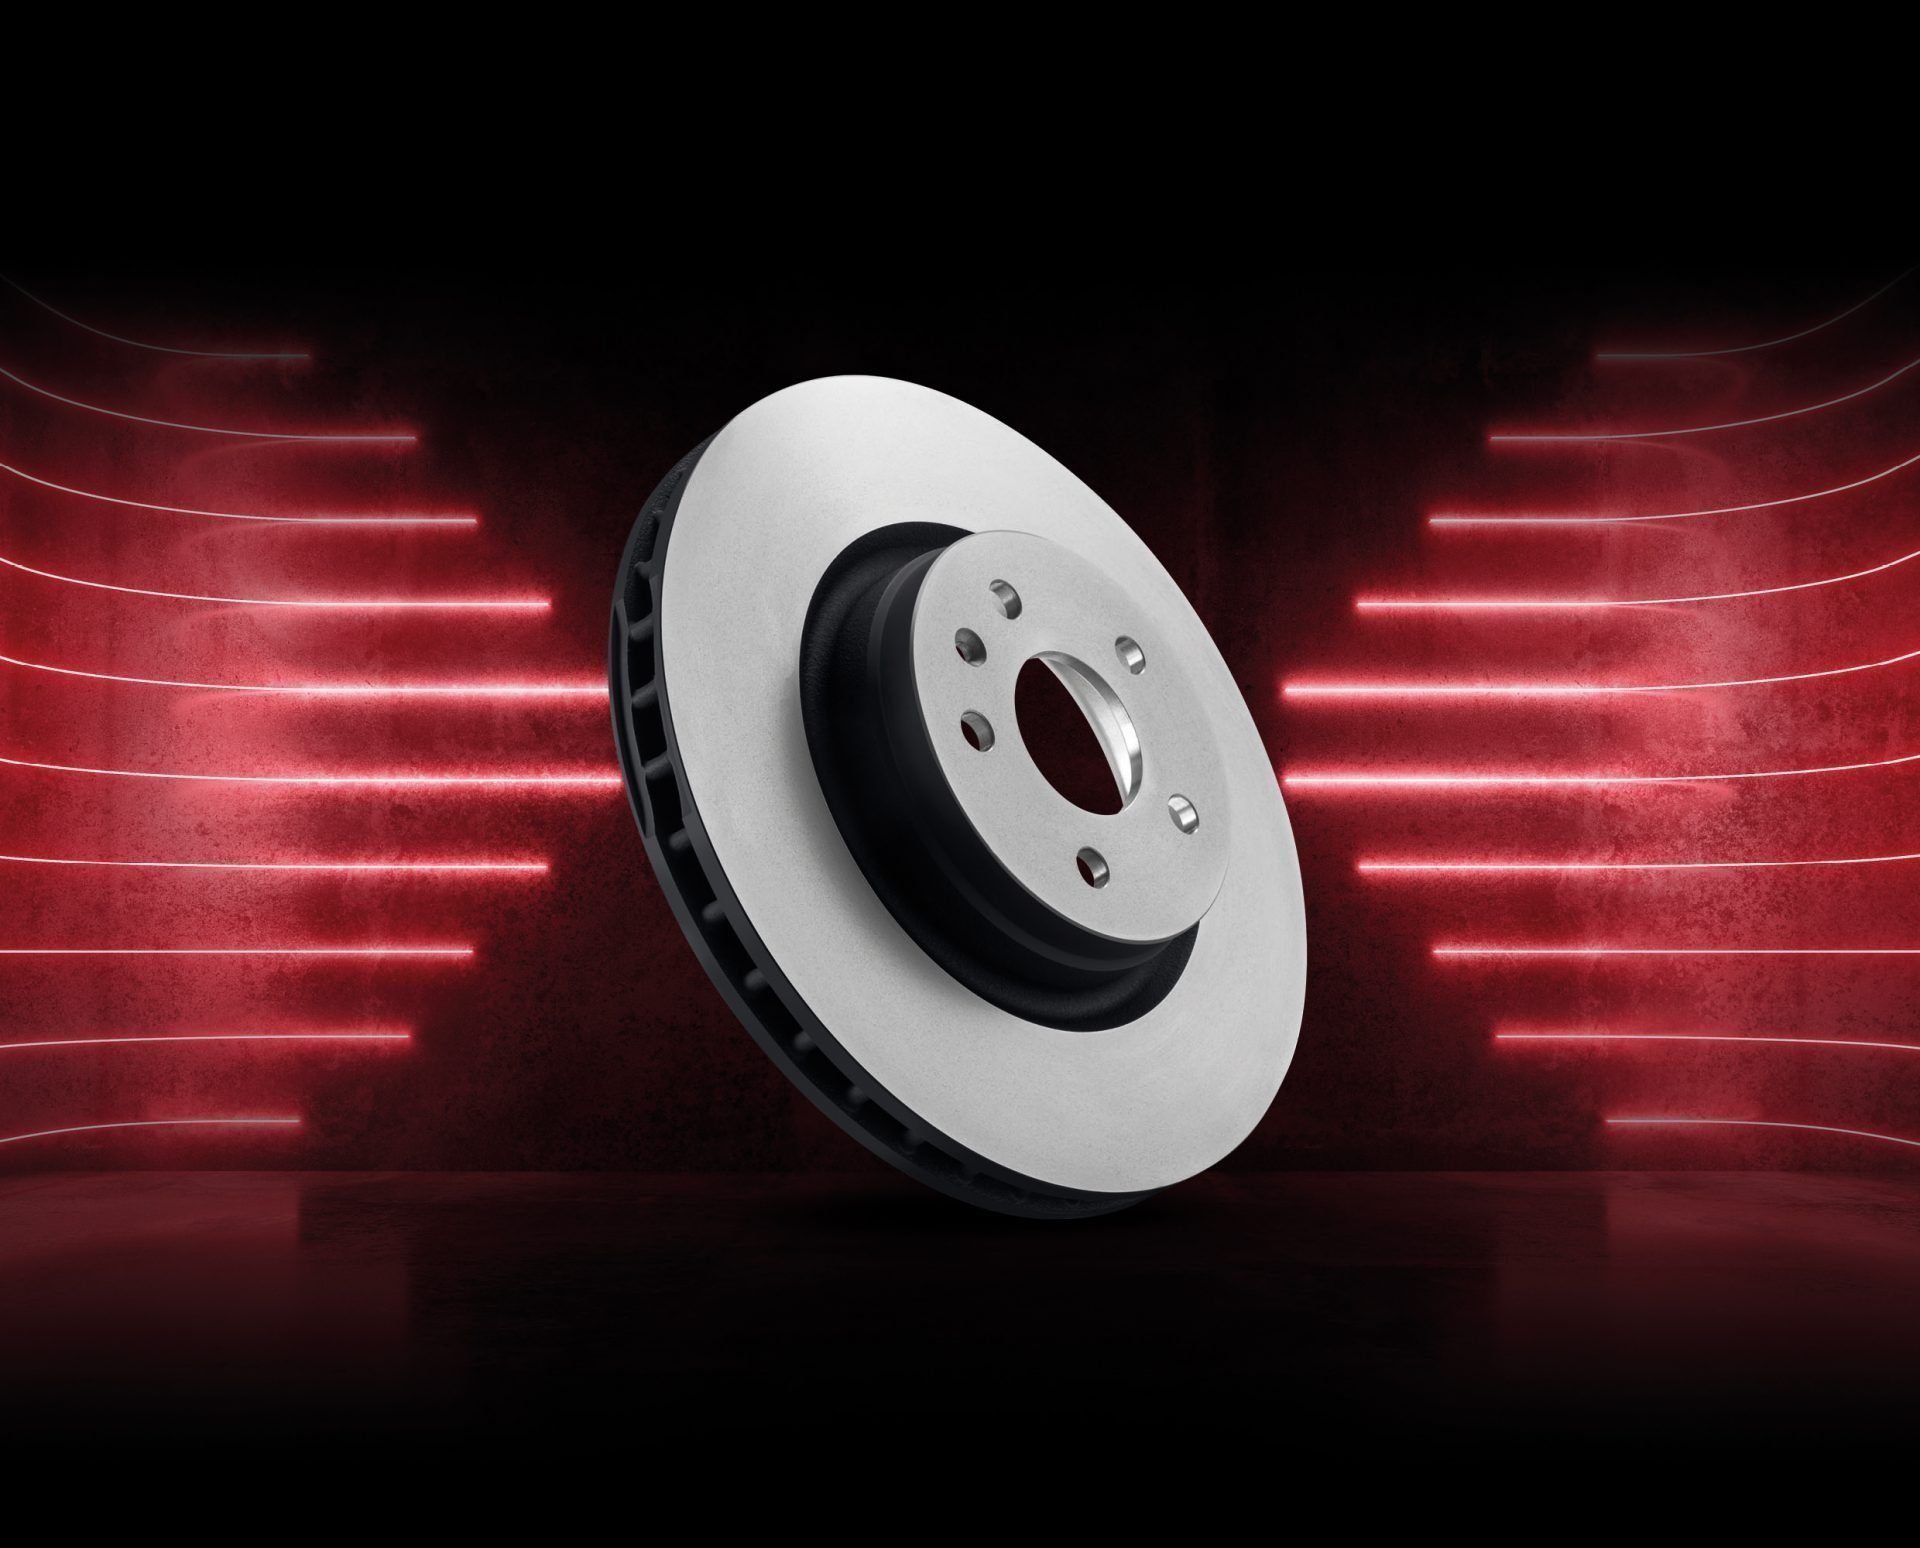 TRW Brake Discs for Tesla Model S Now Available